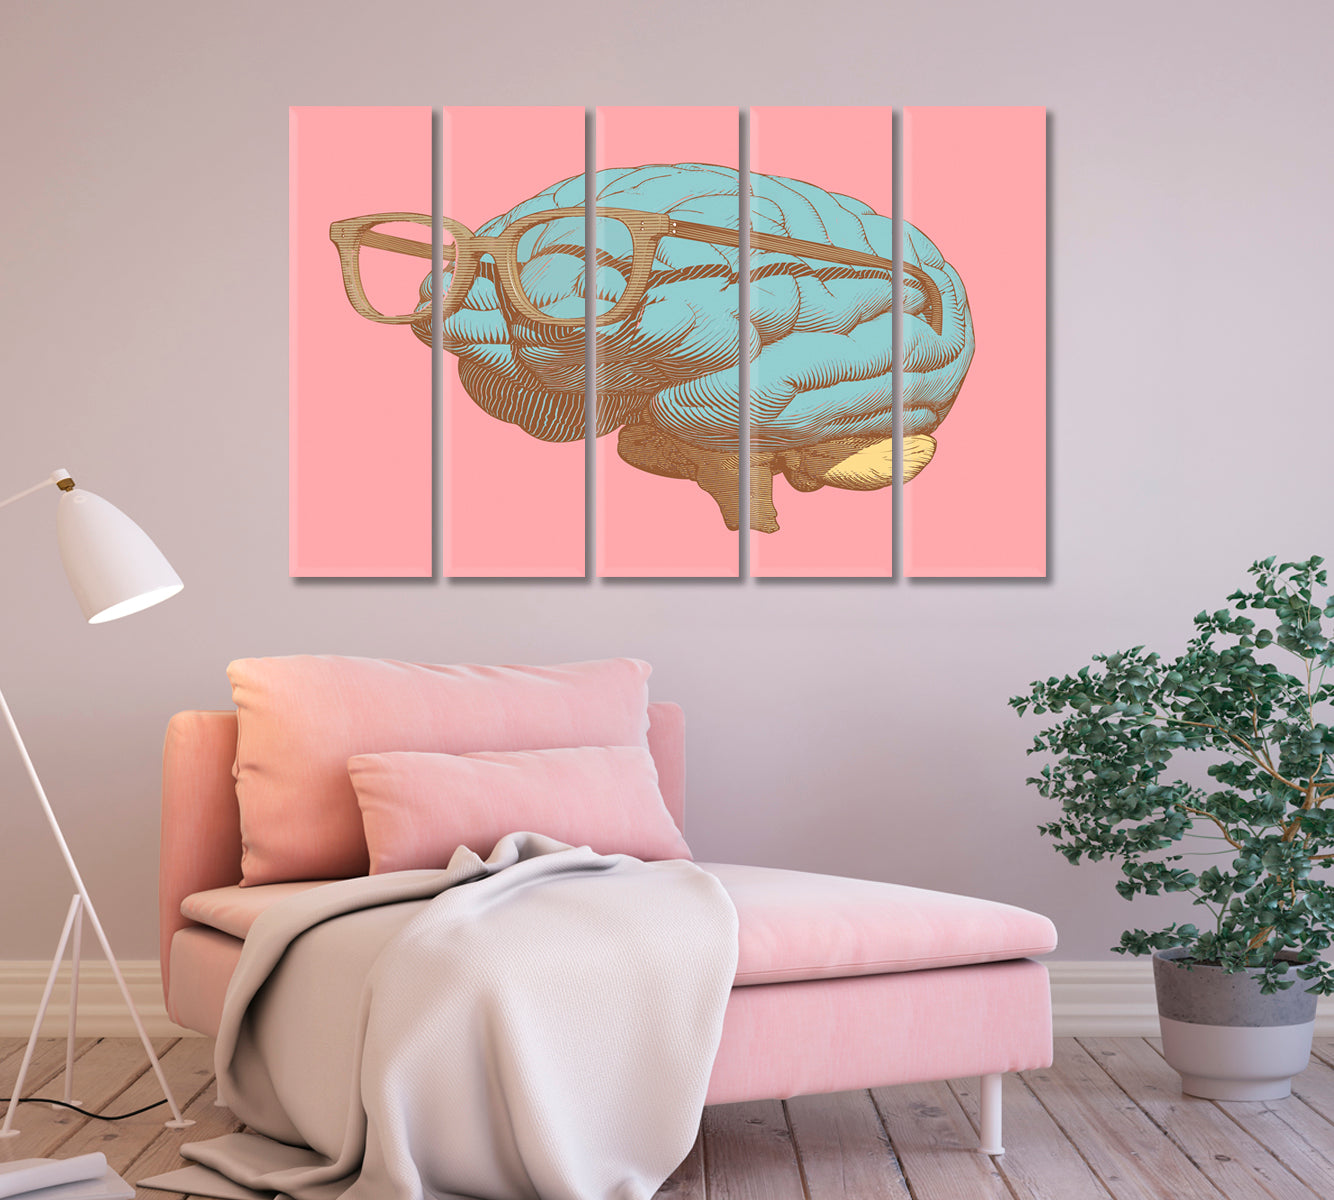 Brain with Glasses Canvas Print-Canvas Print-CetArt-1 Panel-24x16 inches-CetArt